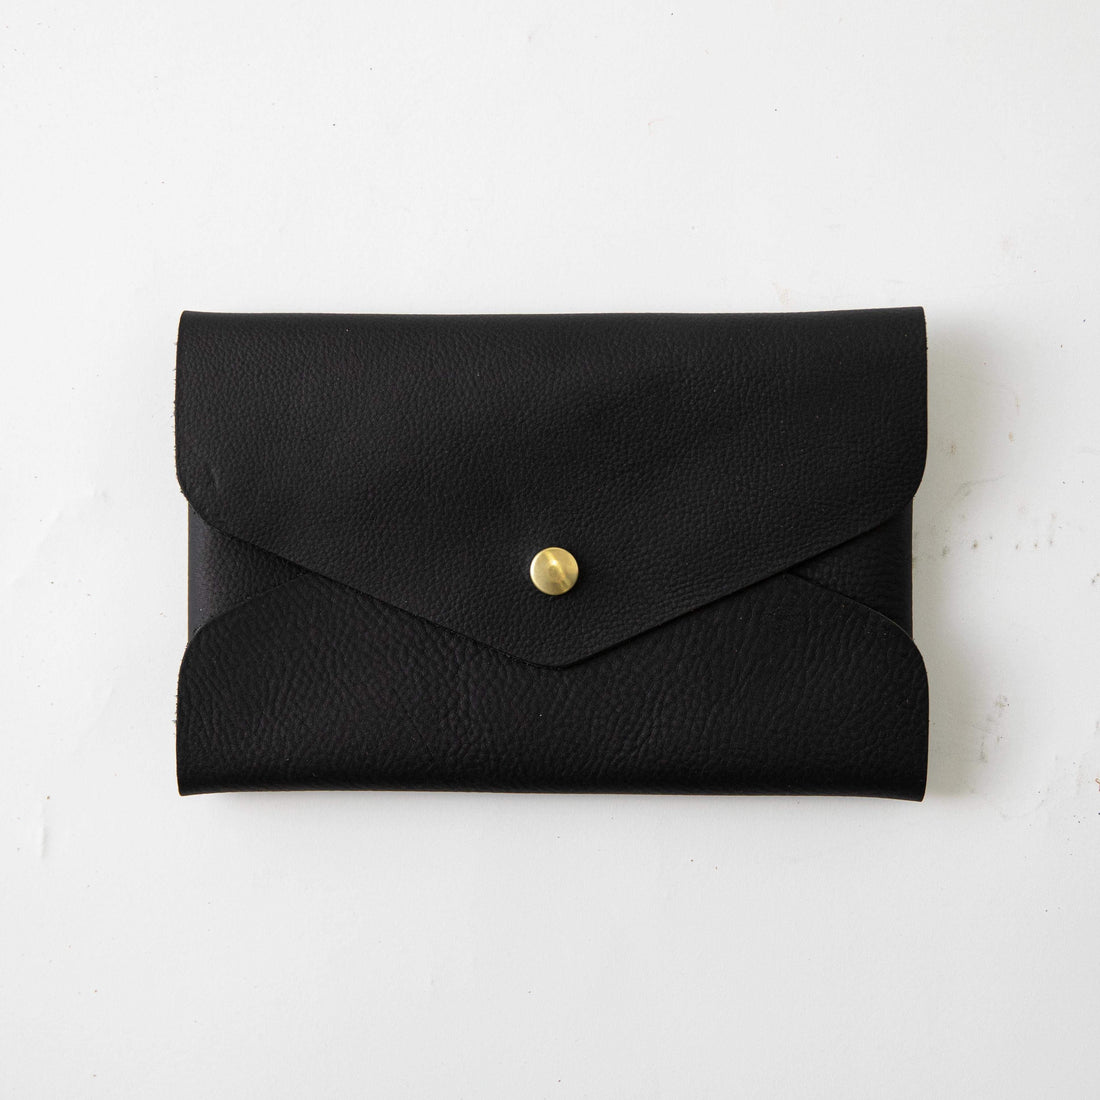 Leather Envelope Clutch, Saddle Tan